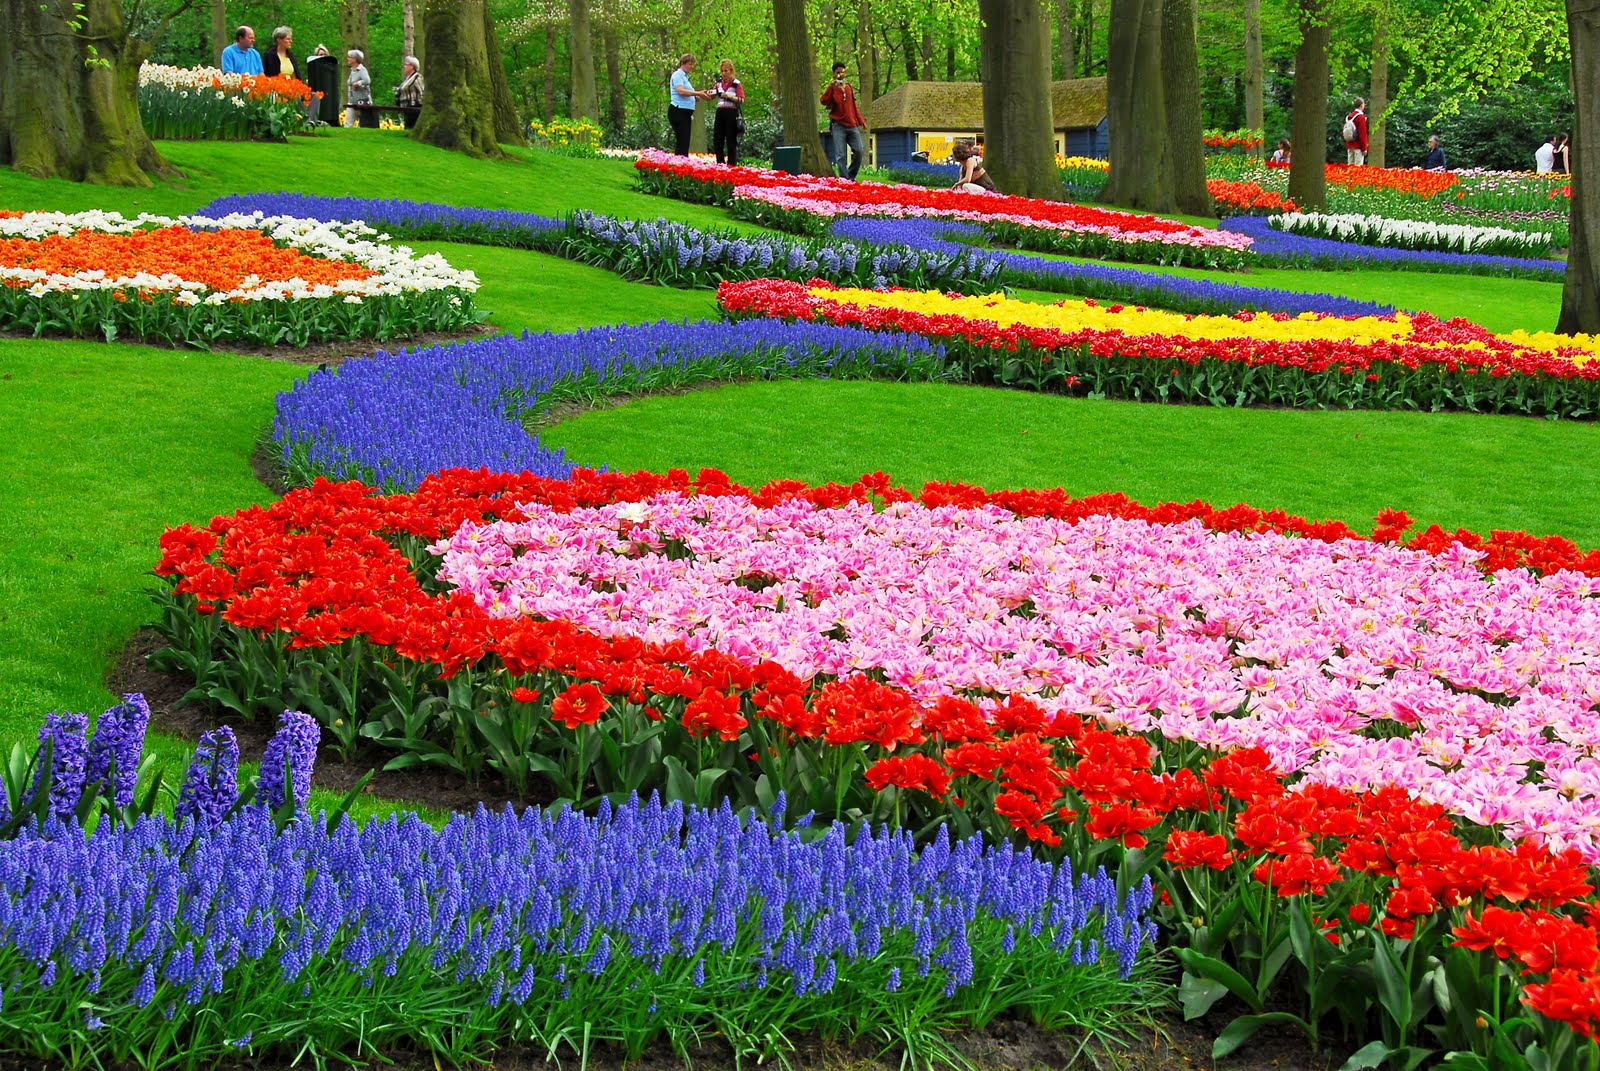 http://1.bp.blogspot.com/-Hfahuxm2V38/T-K2T_uKi-I/AAAAAAAAApA/DXNubR3iUP4/s1600/gambar-pemandangan-taman-bunga-foto-bunga-tulip-flower-garden-wallpapers.jpg